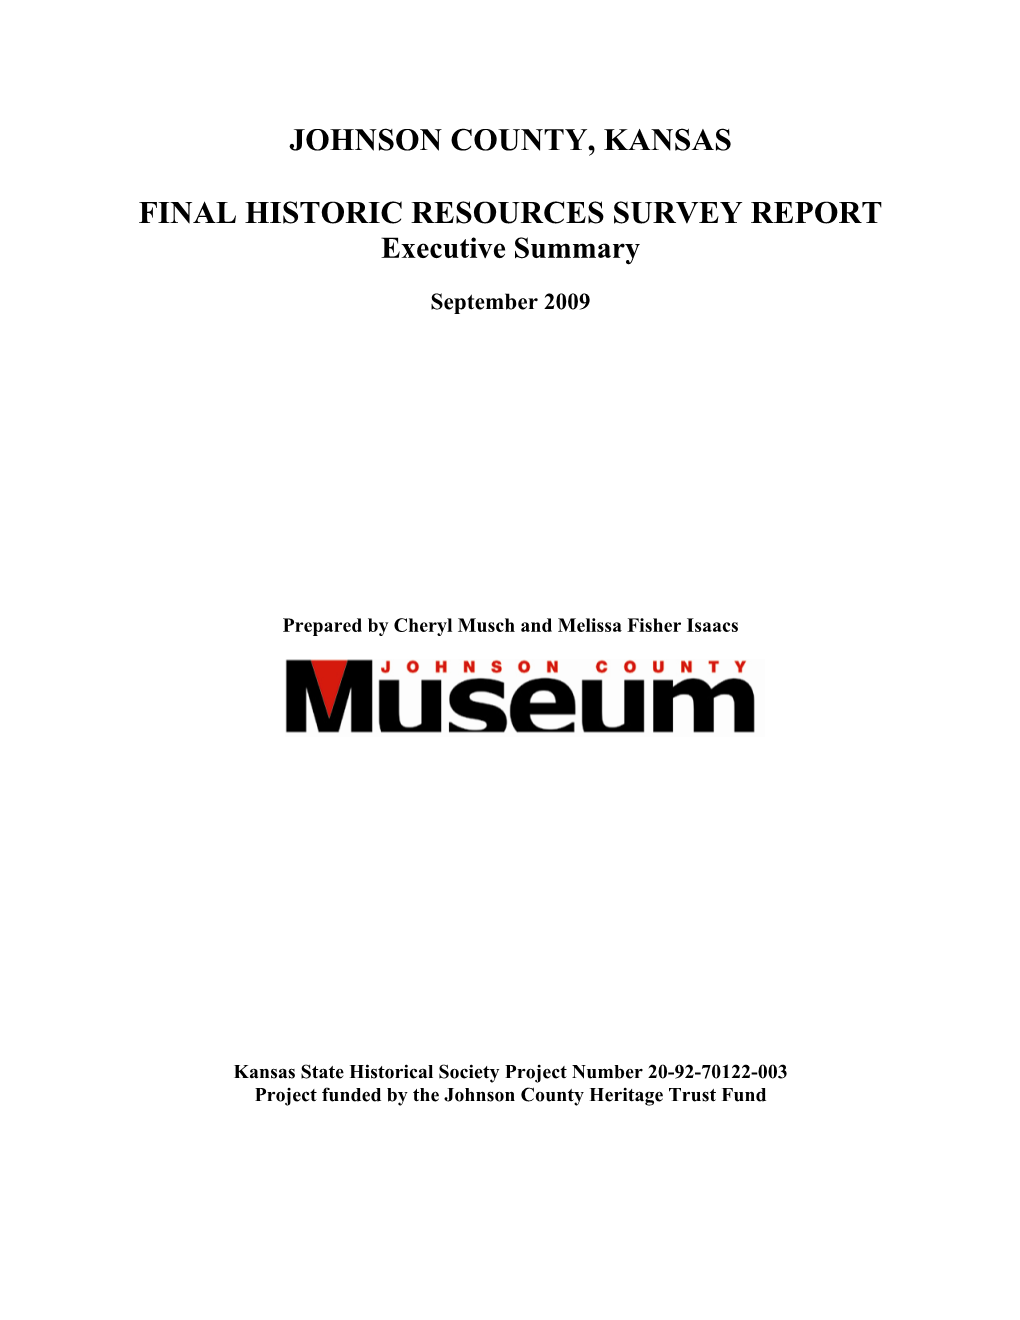 Johnson County, Kansas Final Historic Resources Survey